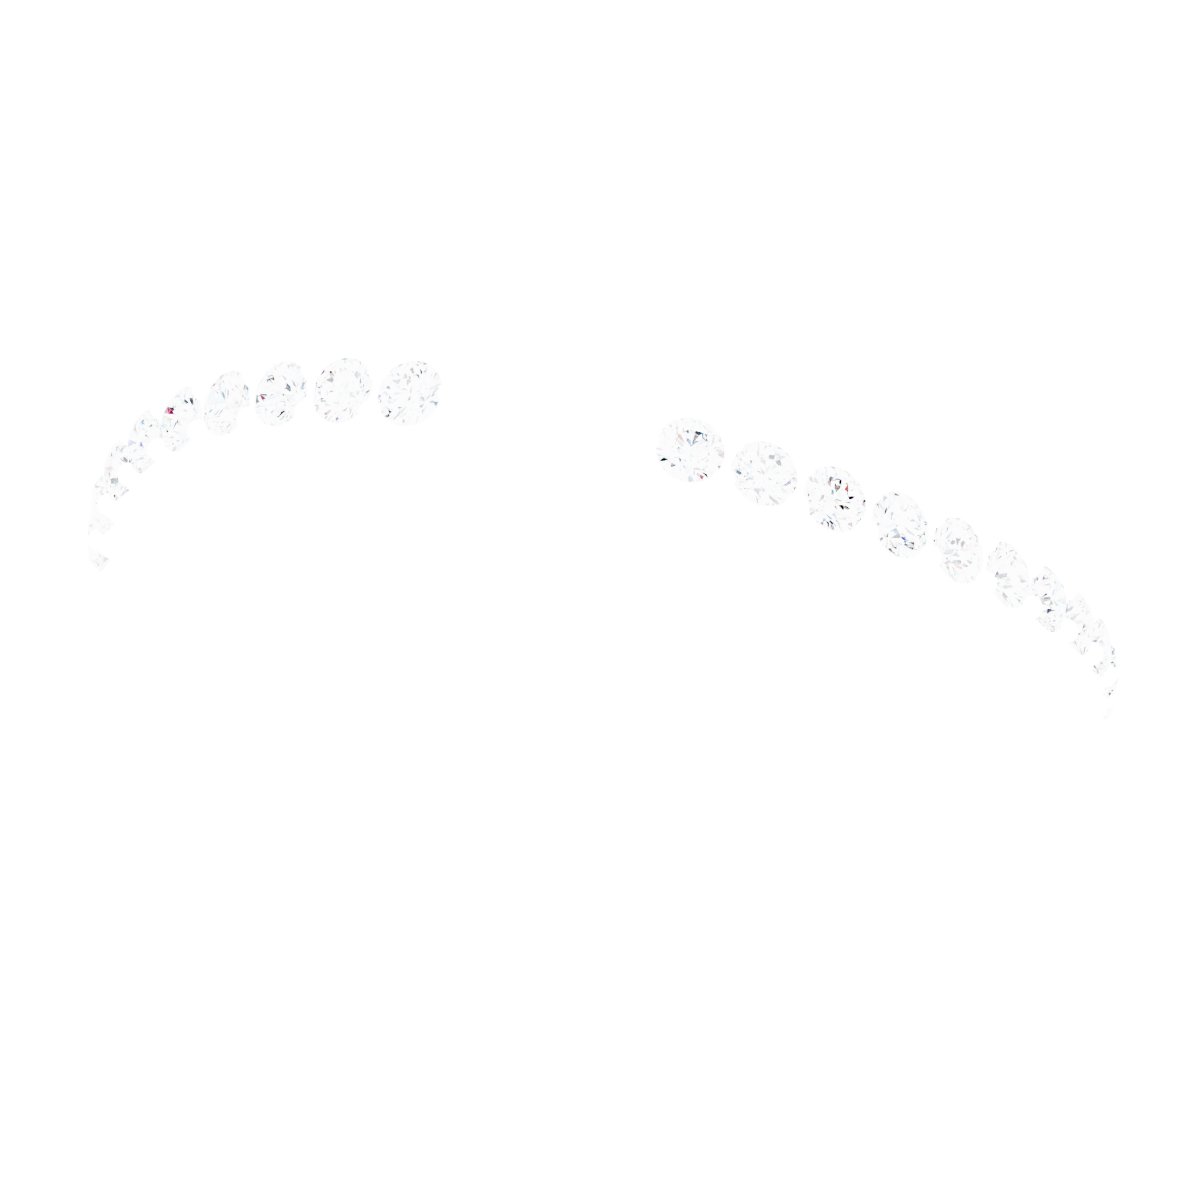 14K White 1/5 CTW Diamond Criss-Cross Ring